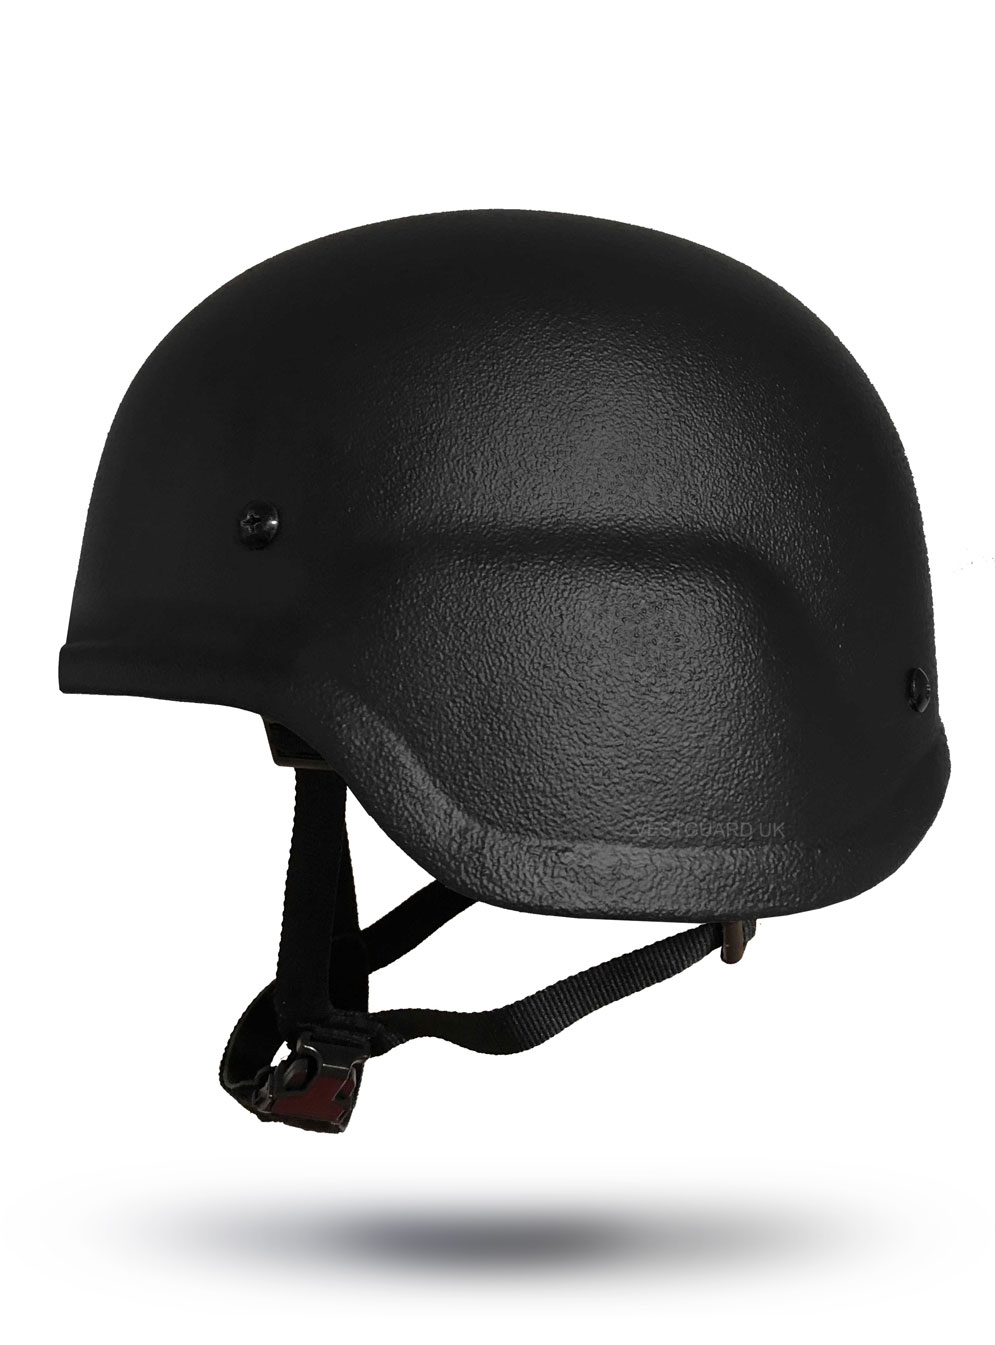 Ballistic Helmet - MICH (MID CUT)